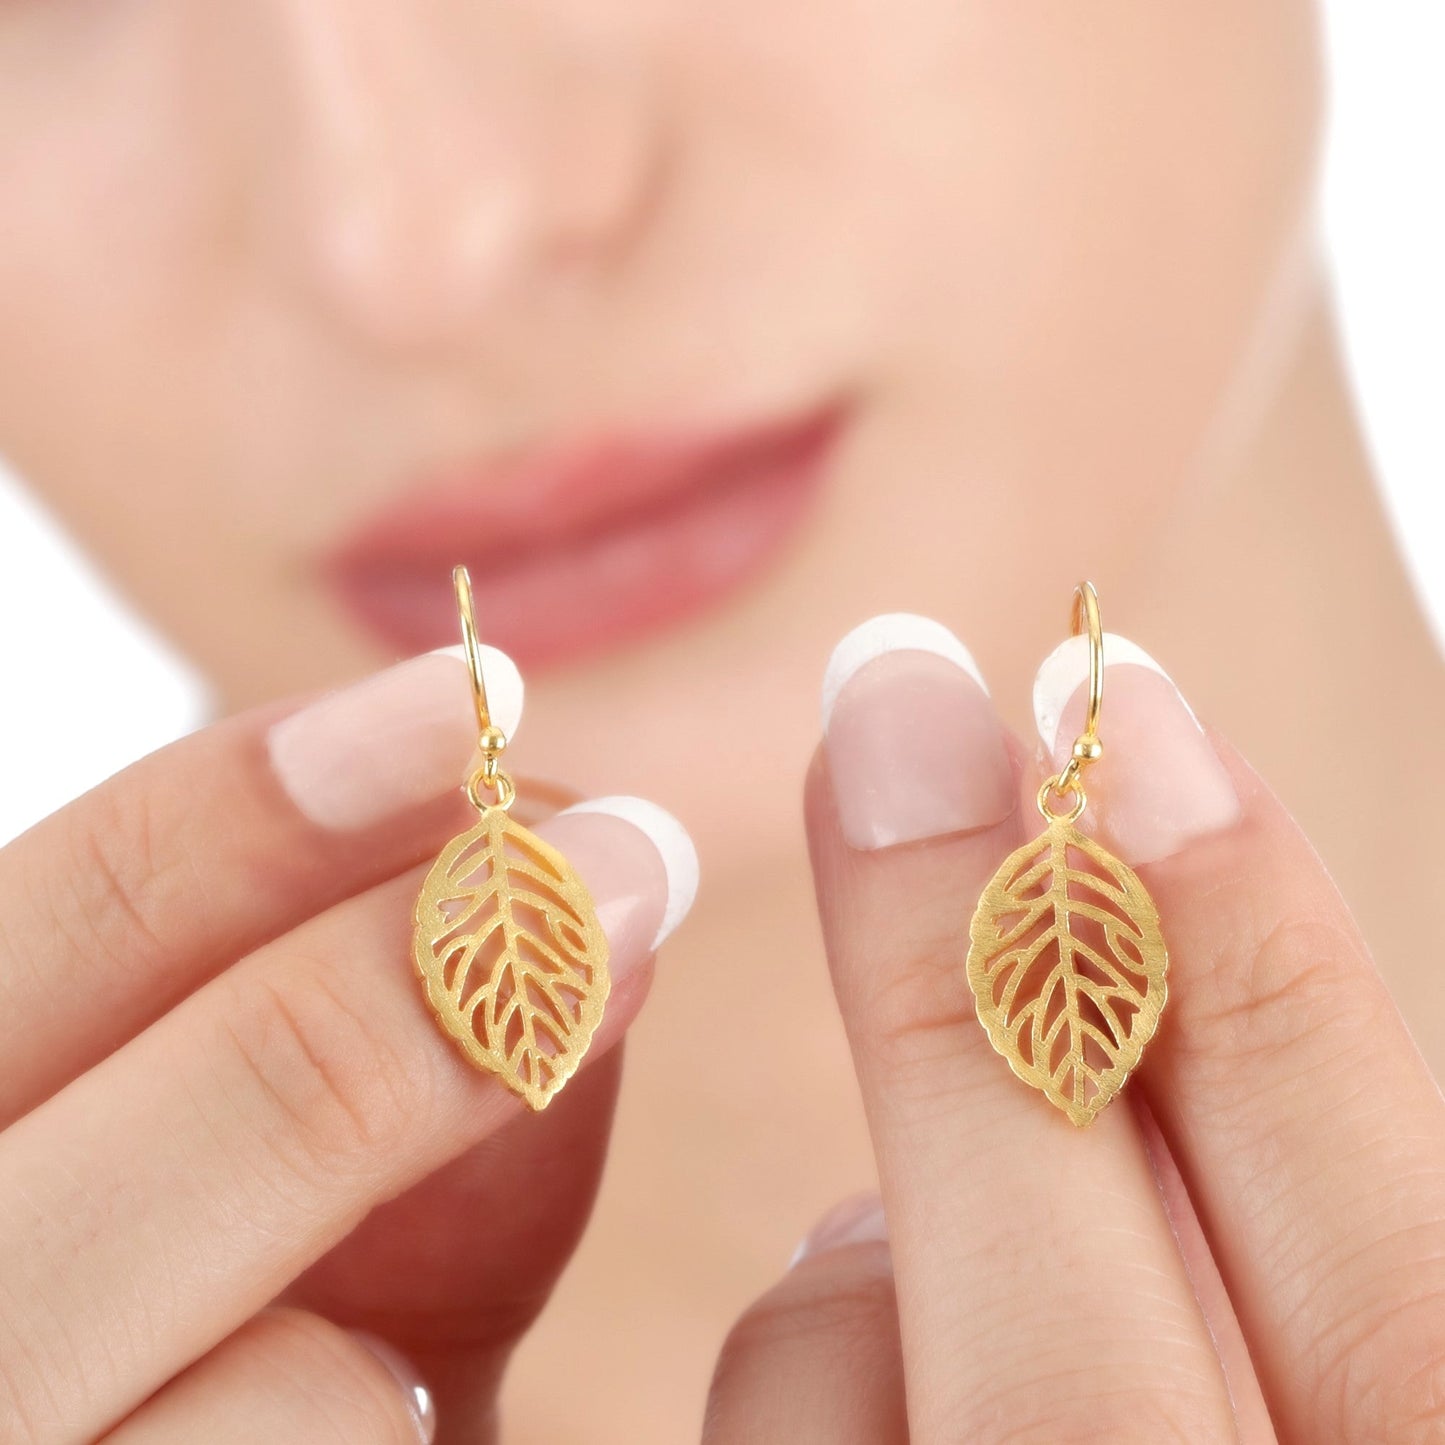 Leaf Earrings - 925 Sterling Gold Plated Botanical Drop Earrings - Ear925-14